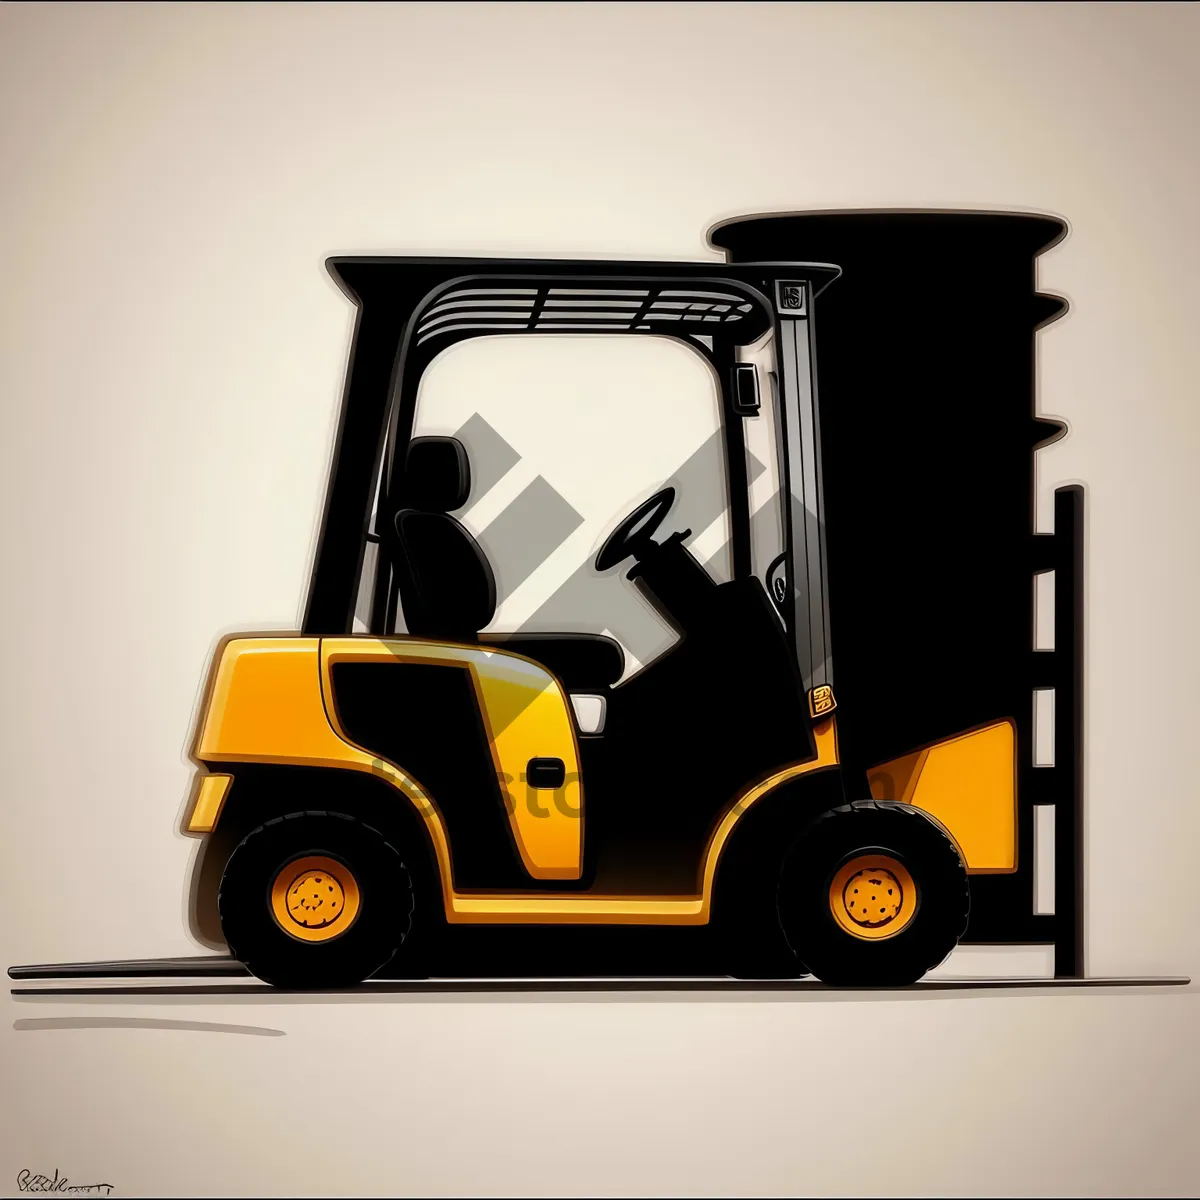 Picture of Versatile Transport: Forklift Truck for Efficient Cargo Delivery